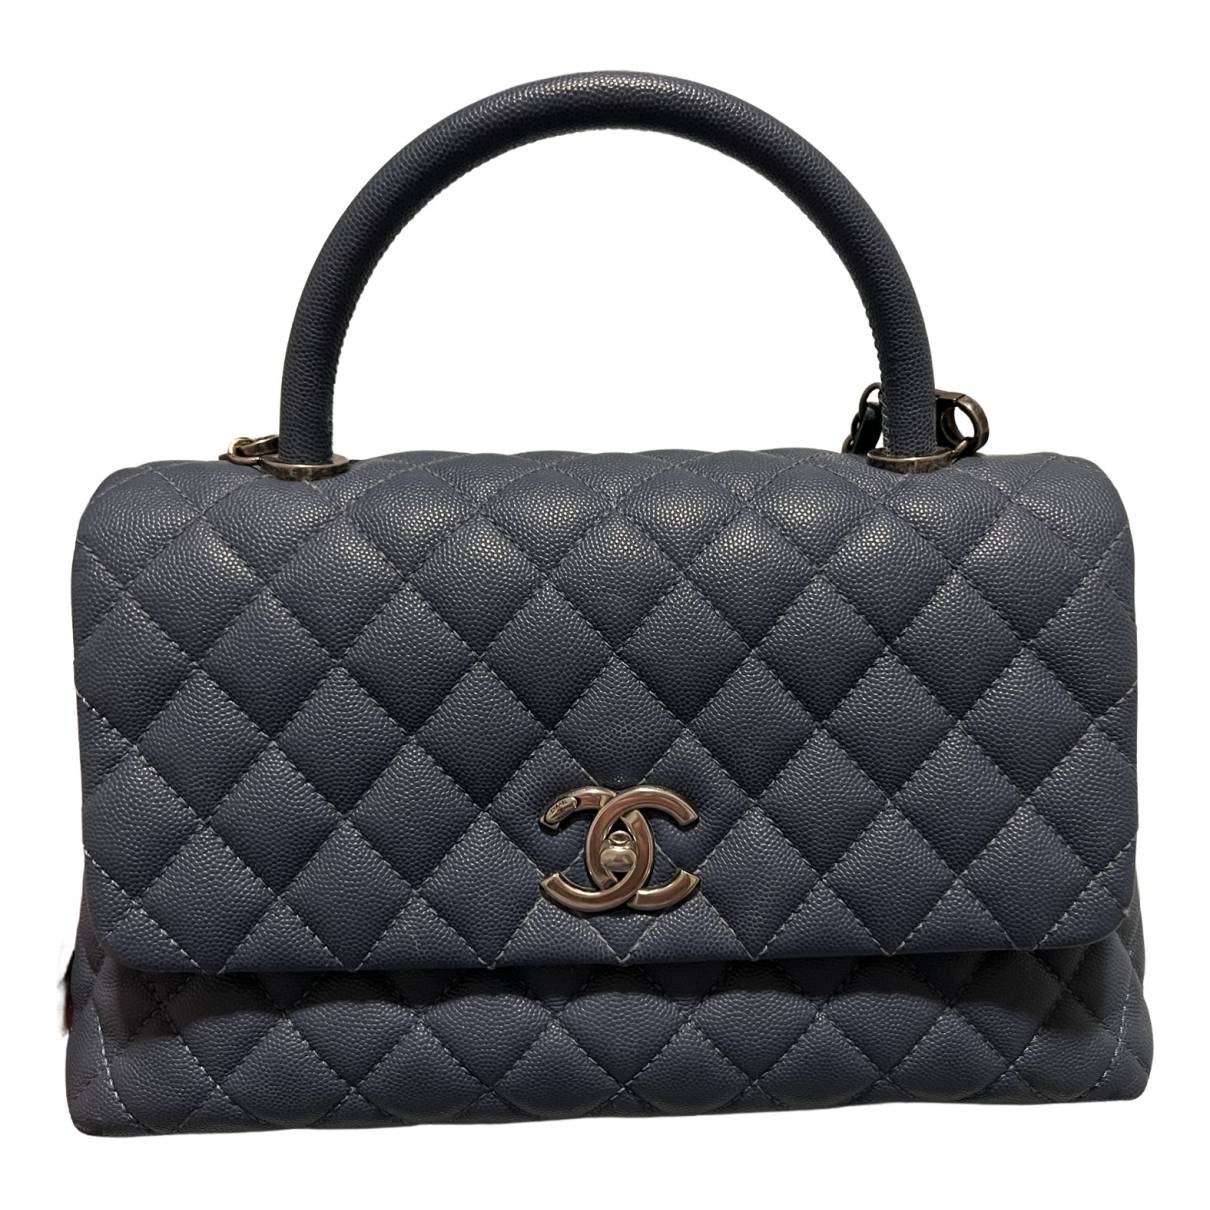 Chanel Classic Flap VS Trendy CC VS Coco Handle Bag Comparison